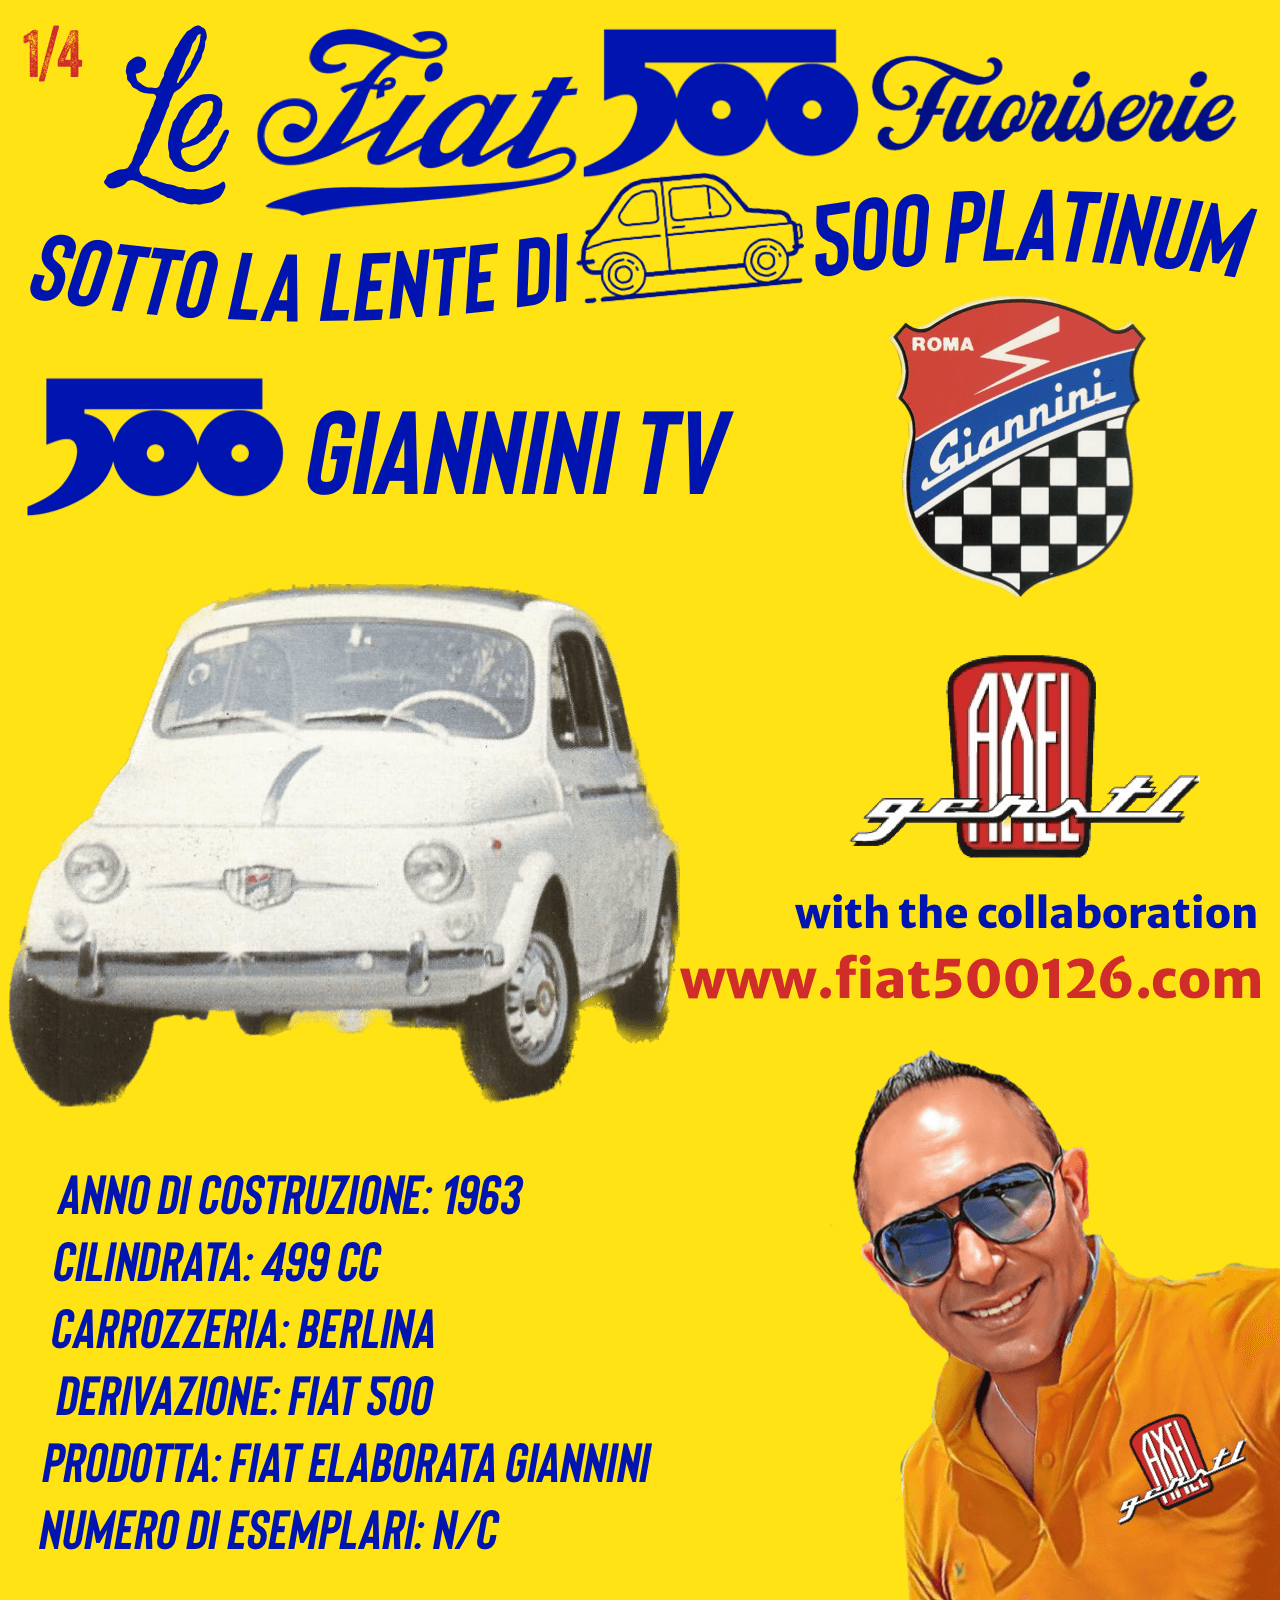 500 Giannini TV